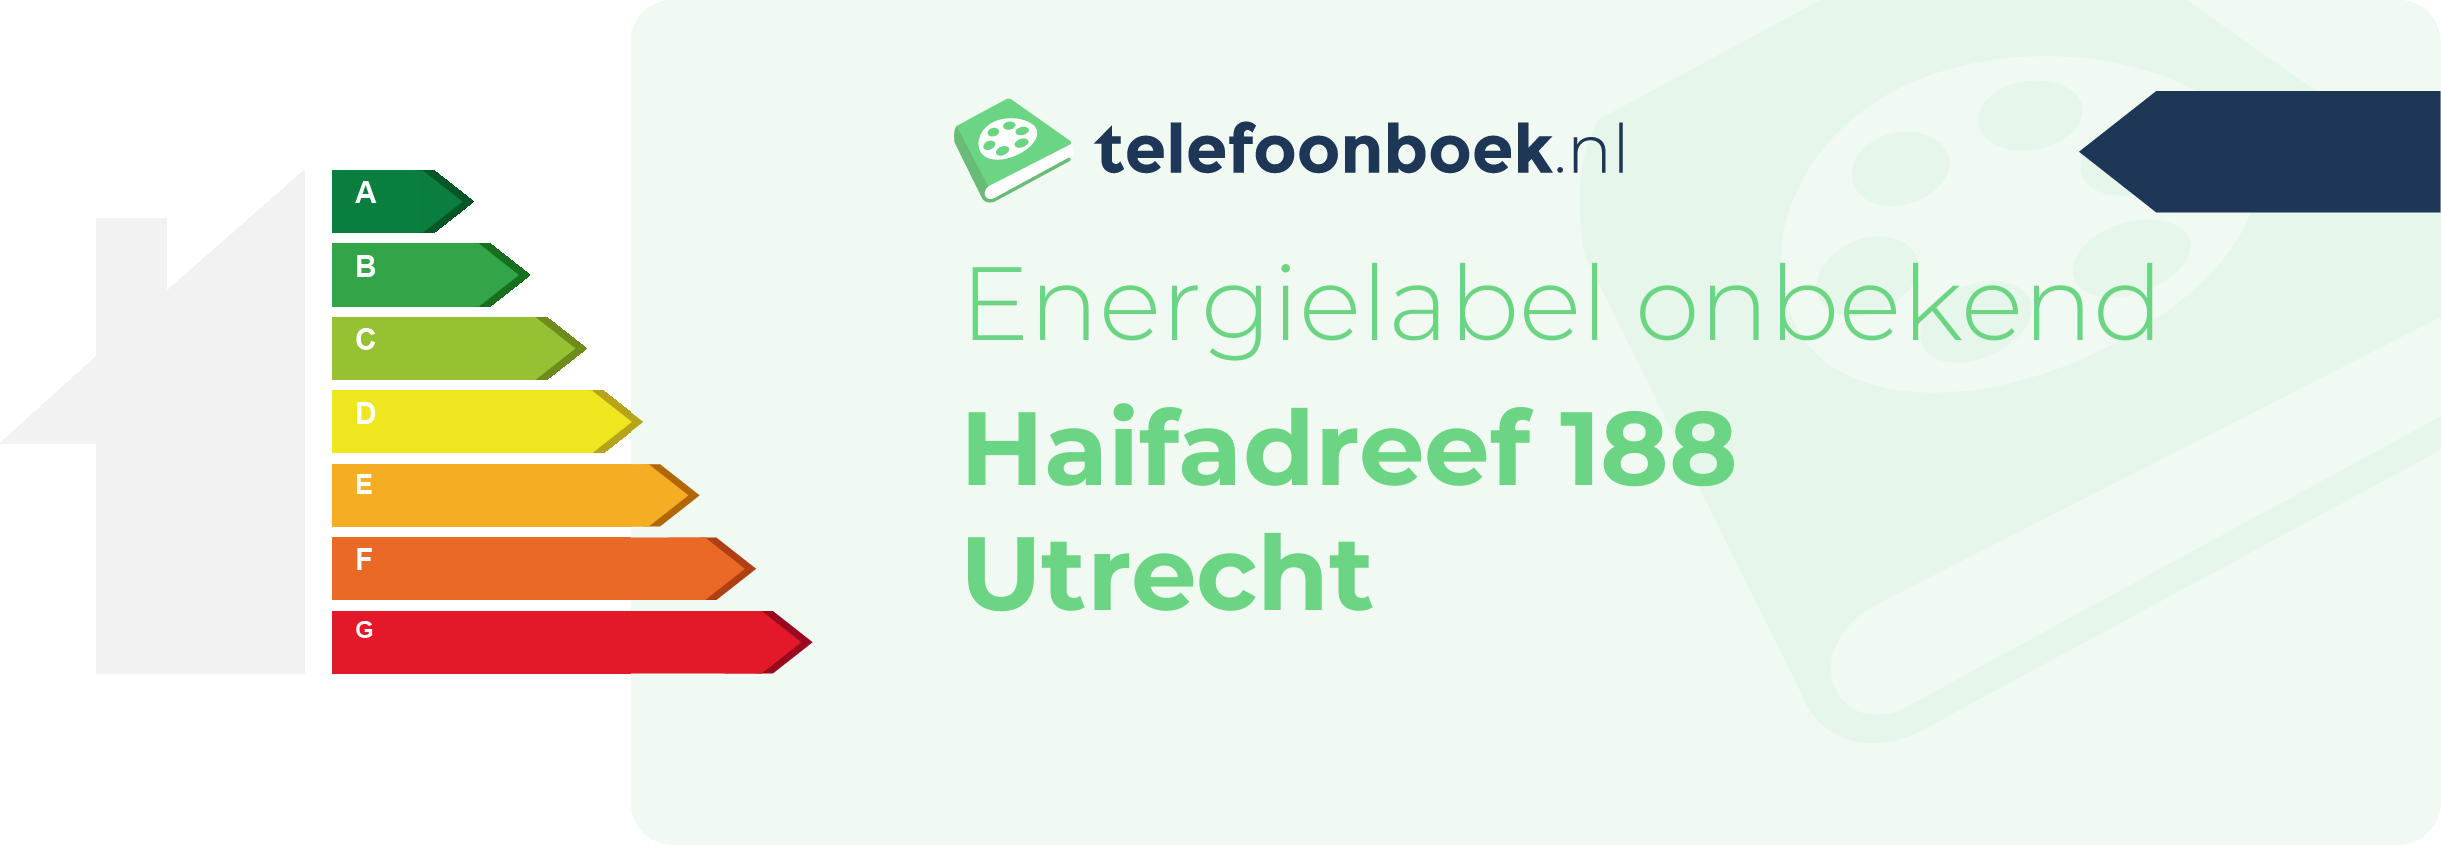 Energielabel Haifadreef 188 Utrecht